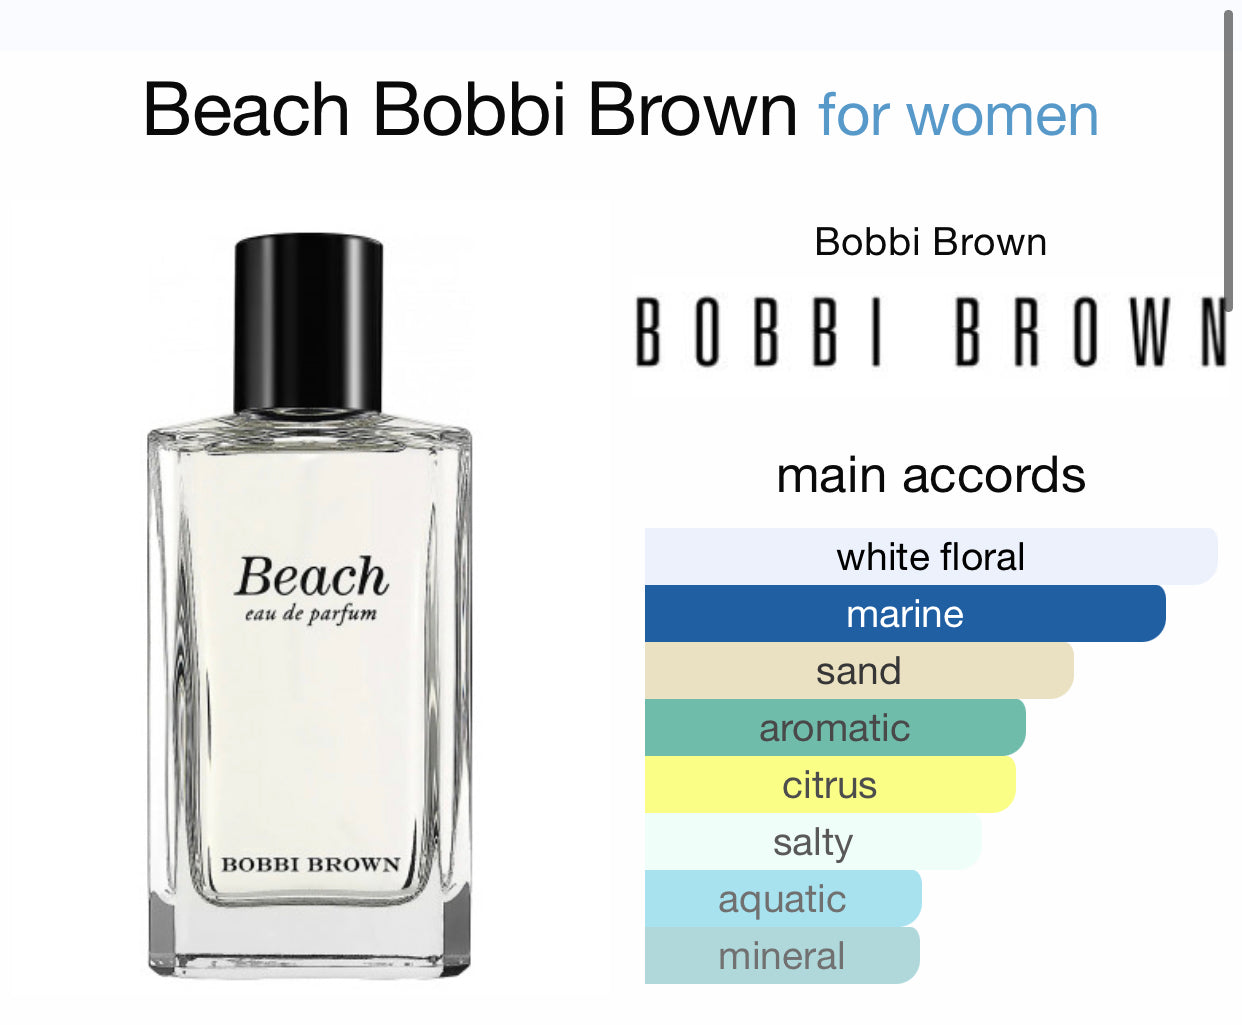 Inspired by Beach Eau De Parfum from Bobbi Brown Joi